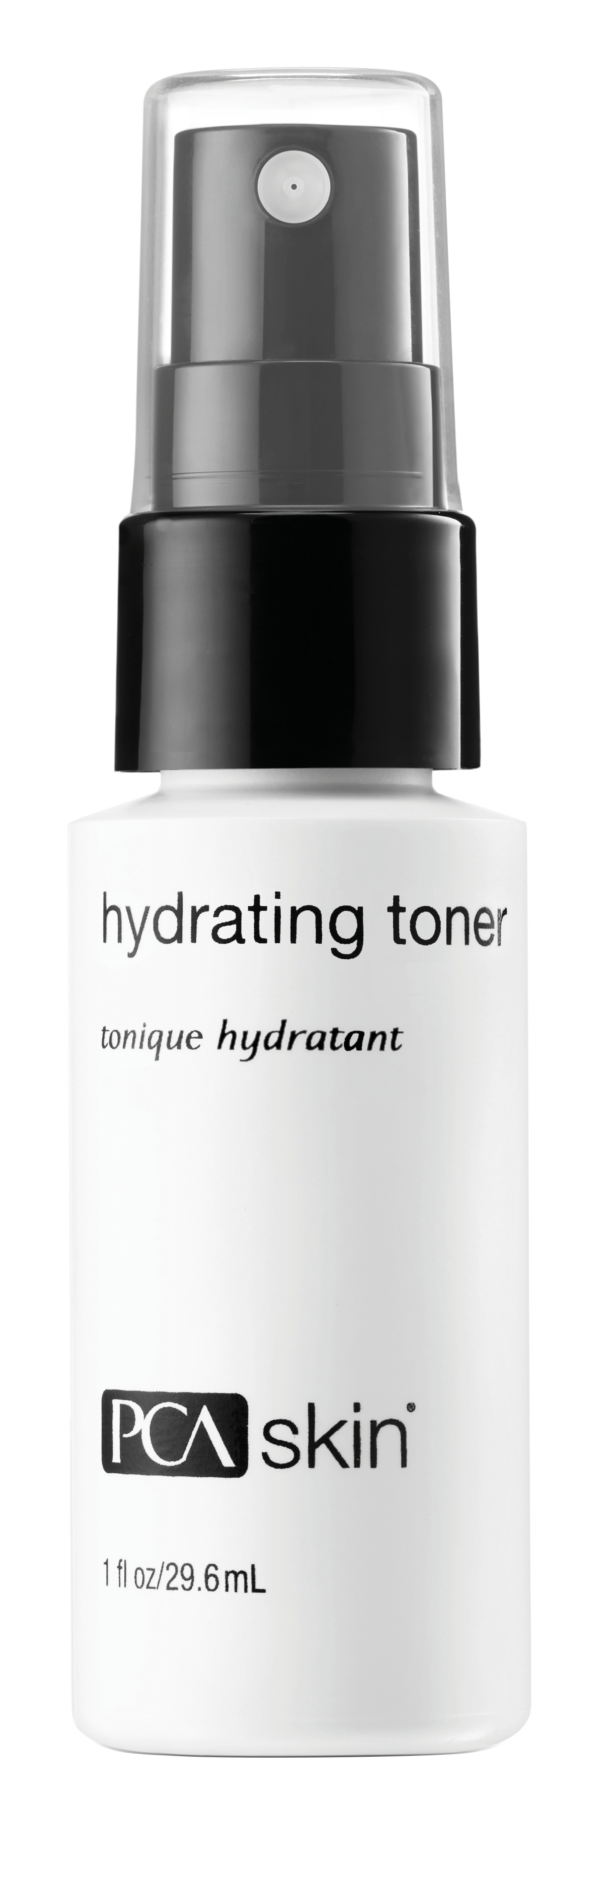 PCA_Skin_Hydrating_Toner_Spray